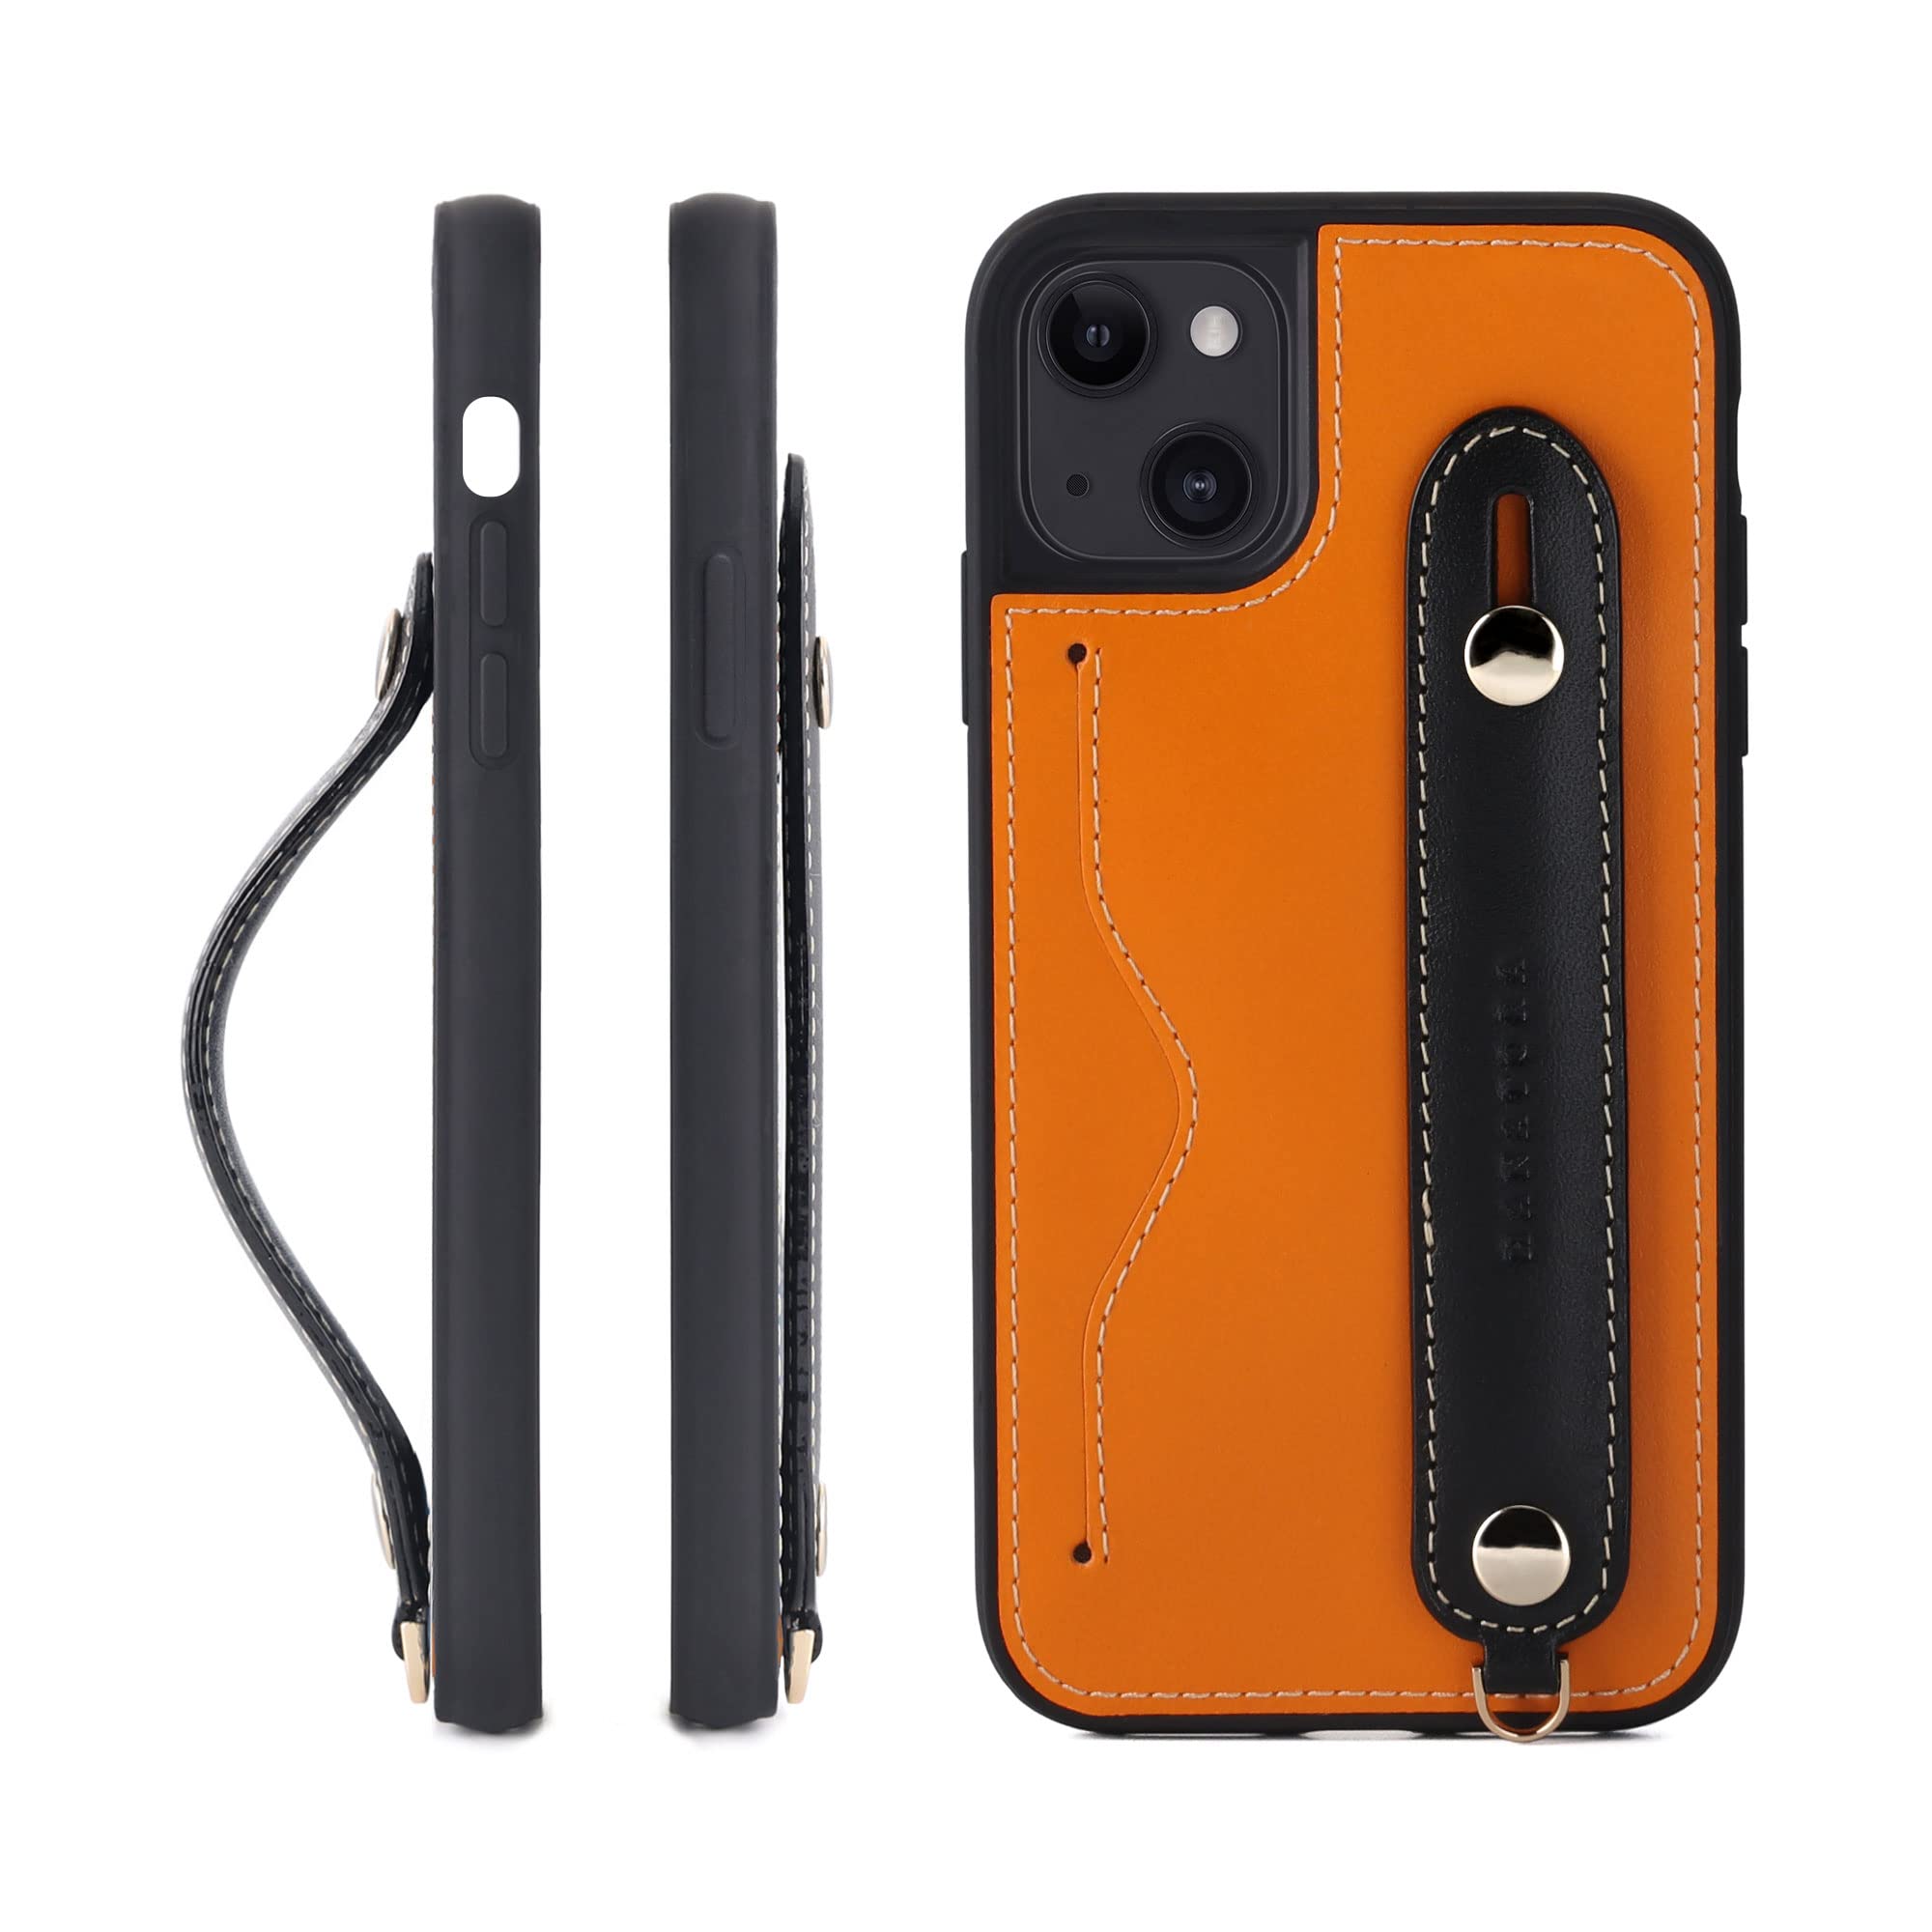 [HANATORA] iPhone13 ケース 本革 グリップケース レザー ストラップ付属 イタリア製牛革 ヌメ革 片手操作 カード収納 スタンド機能 メンズ レディース オレンジ/ブラック CGH-13-Orange-BK